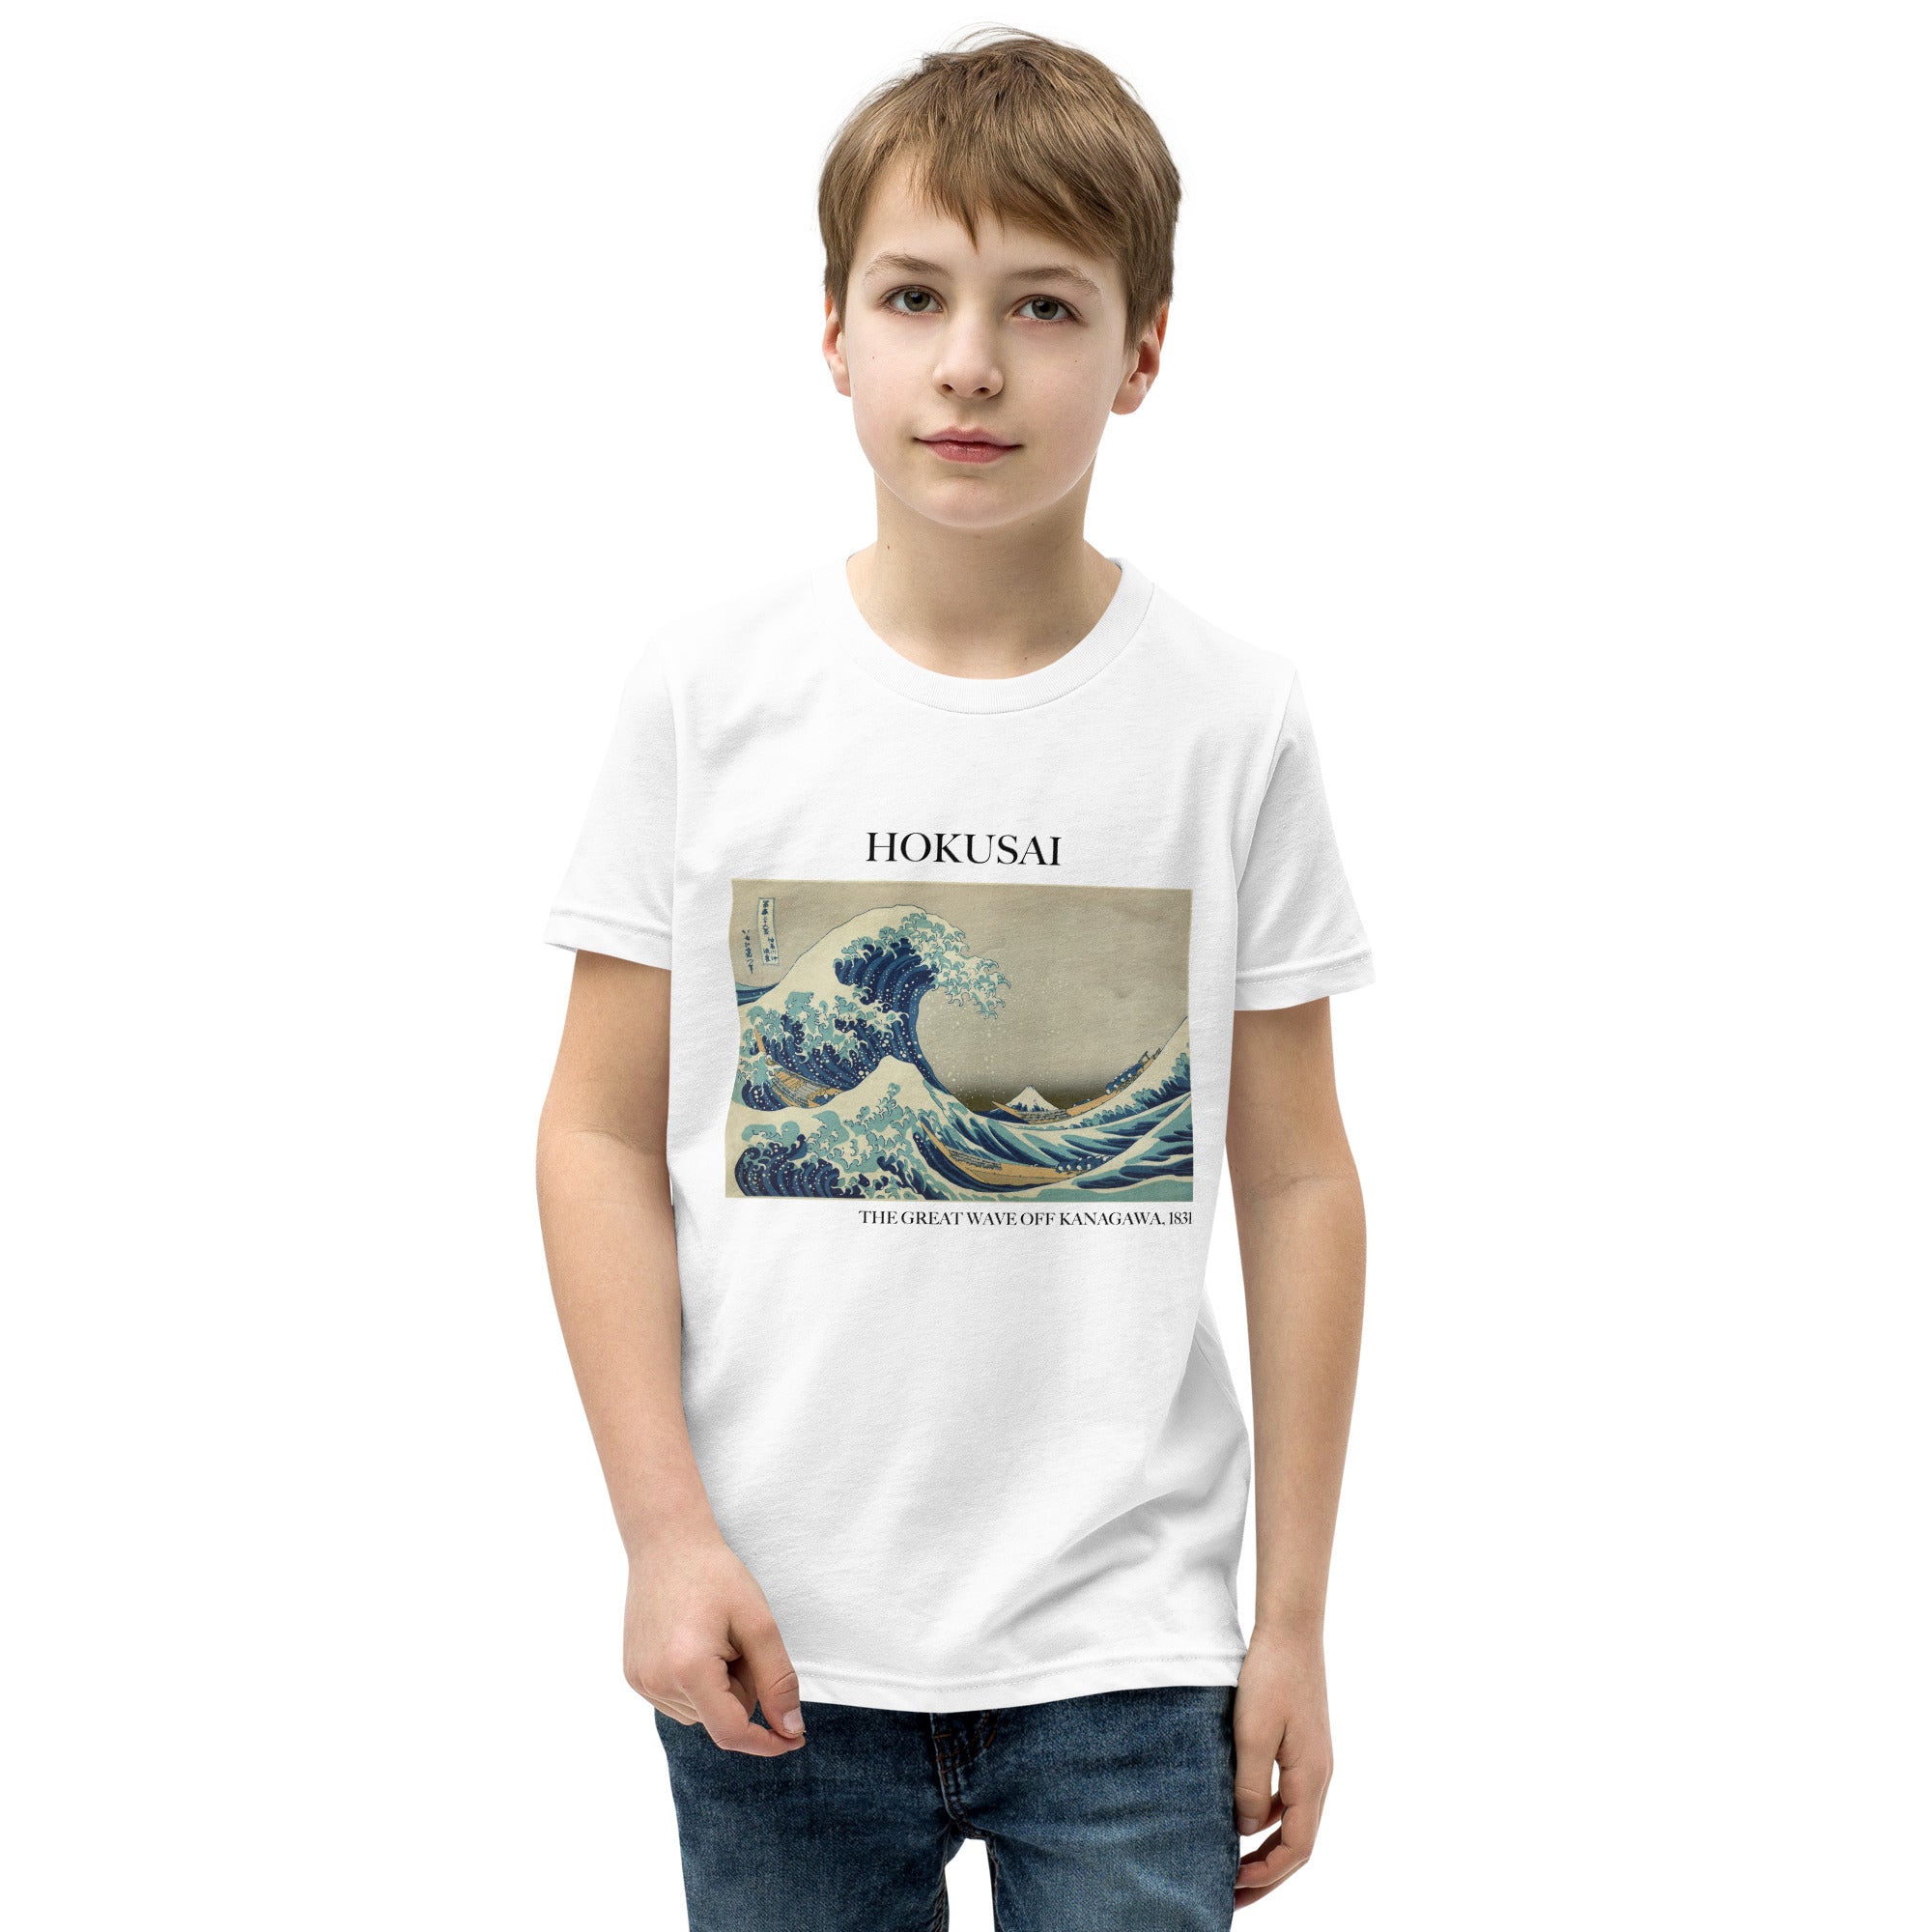 Hokusai 'The Great Wave off Kanagawa' Famous Painting Short Sleeve T-Shirt | Premium Youth Art Tee